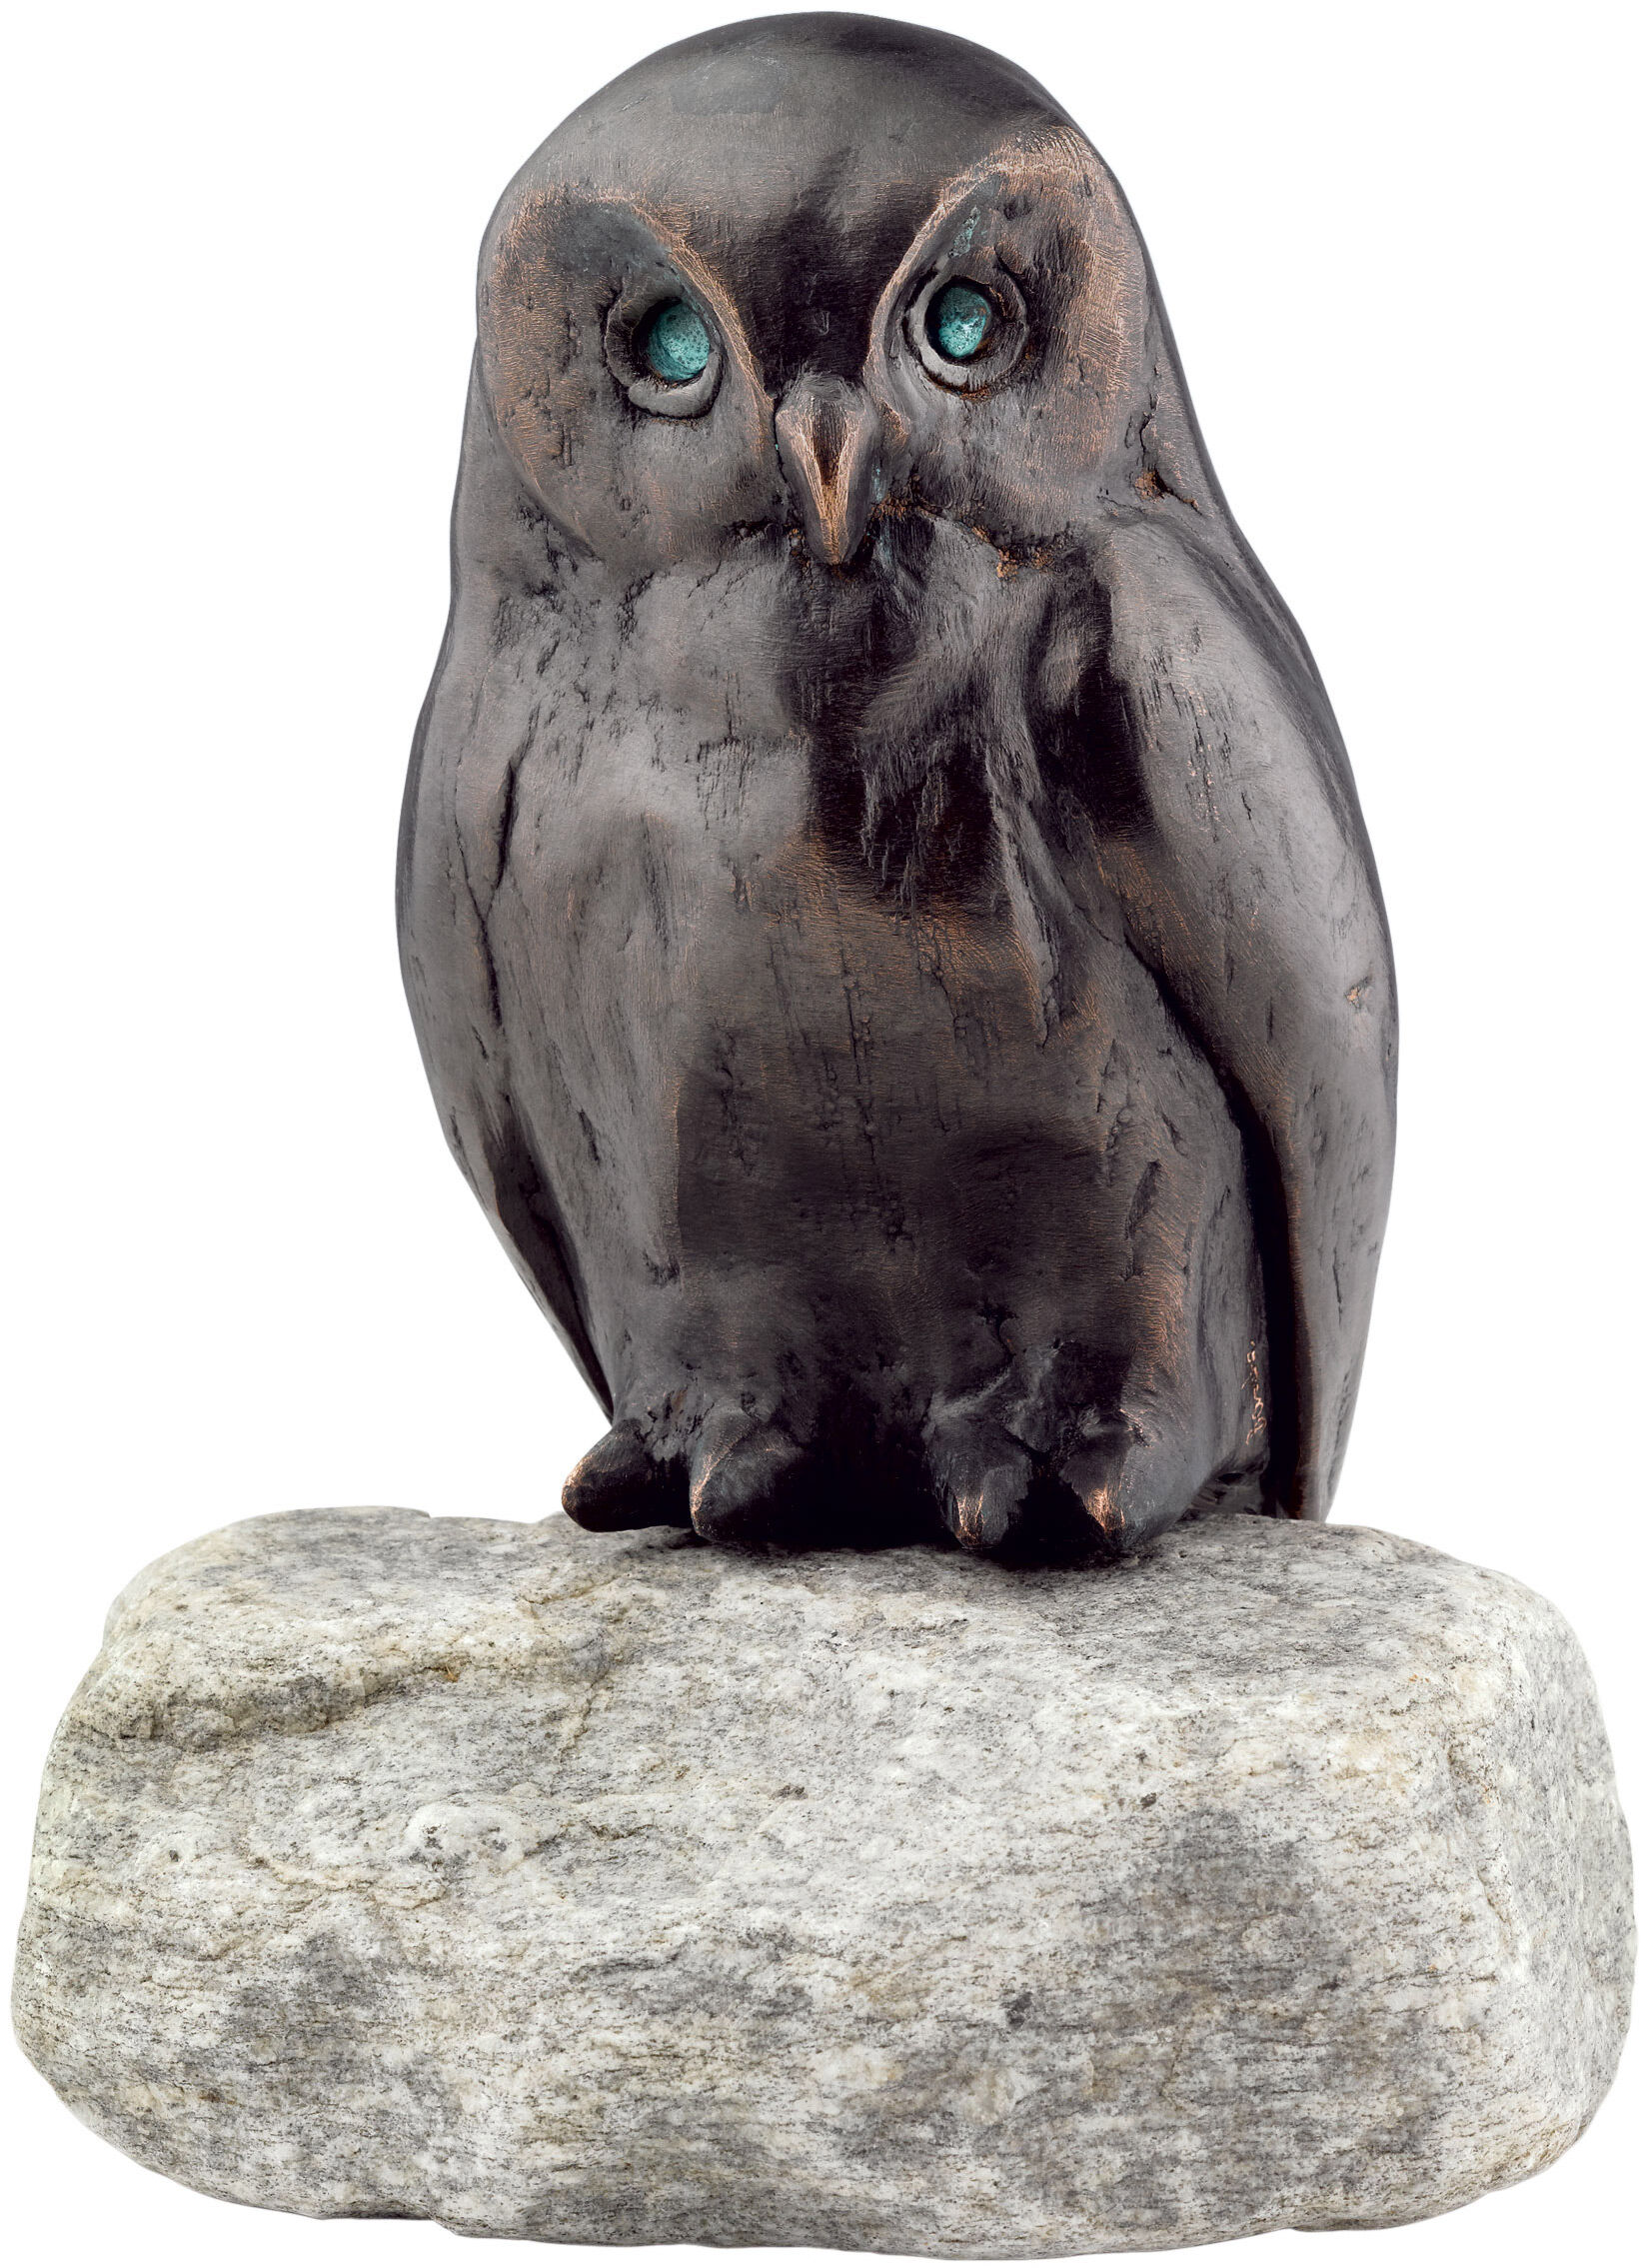 Garden sculpture "Owl", copper on stone